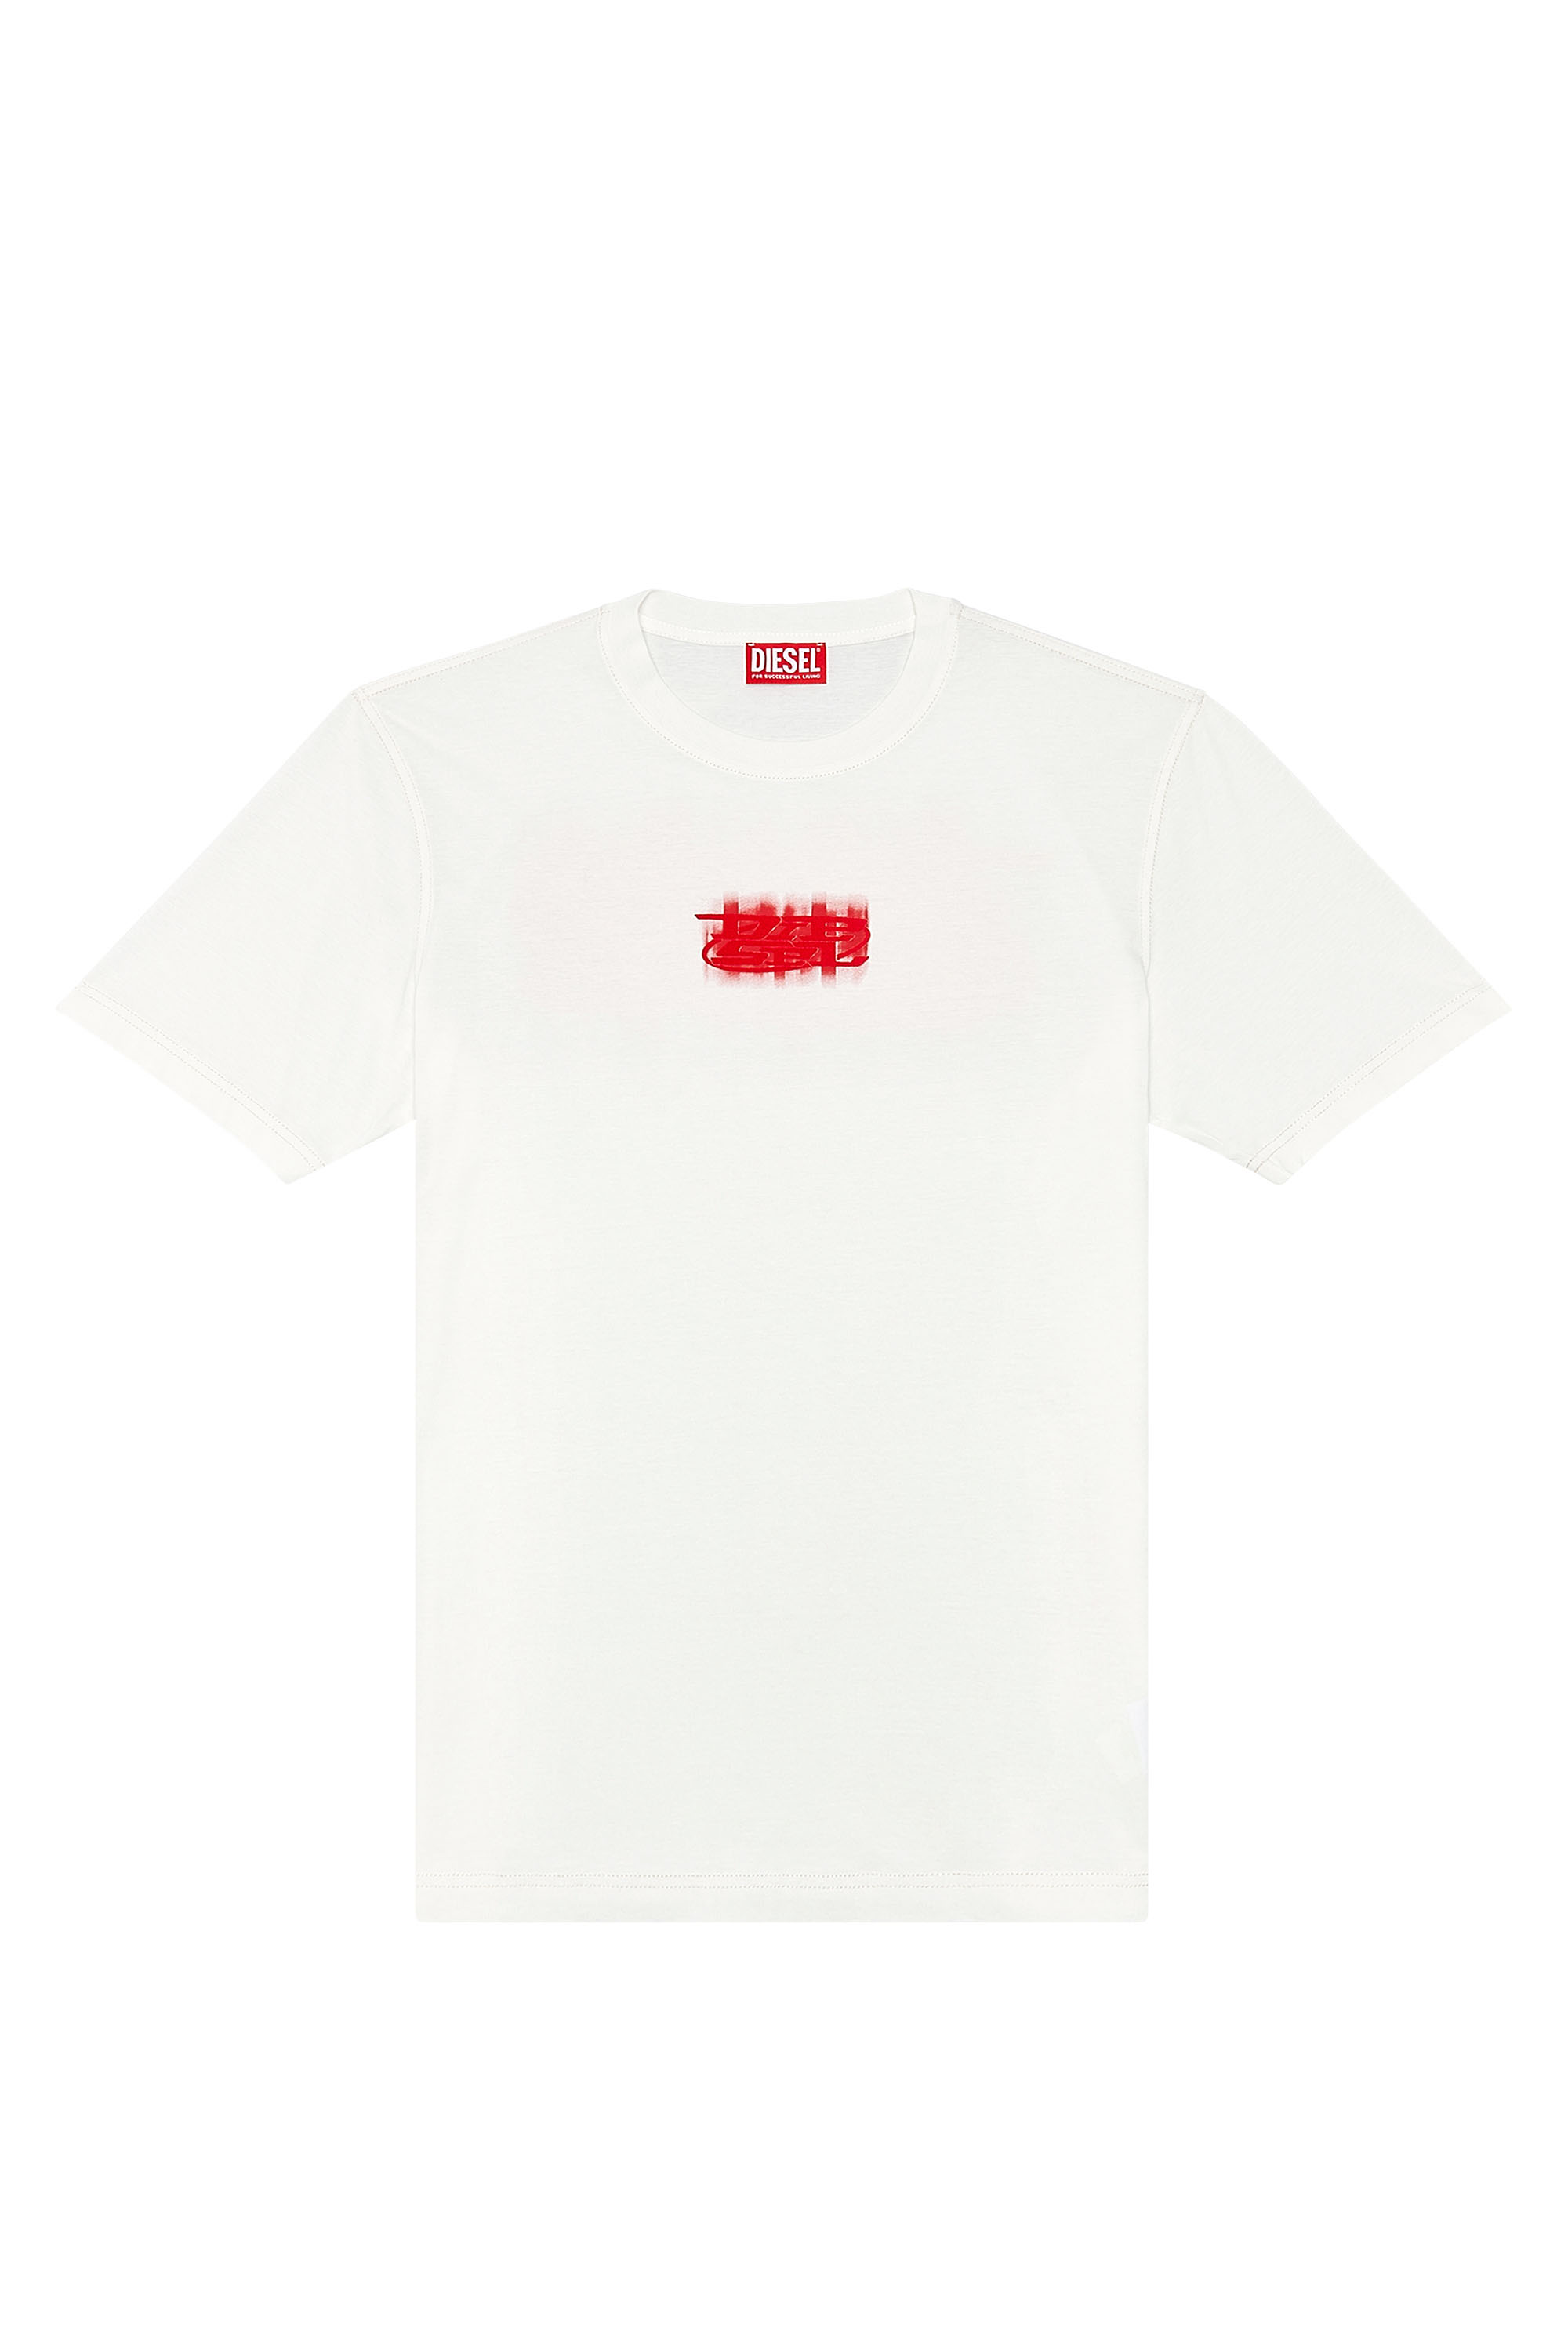 Diesel - T-JUST-N4, Man Logo-flocked T-shirt in organic cotton in White - Image 3